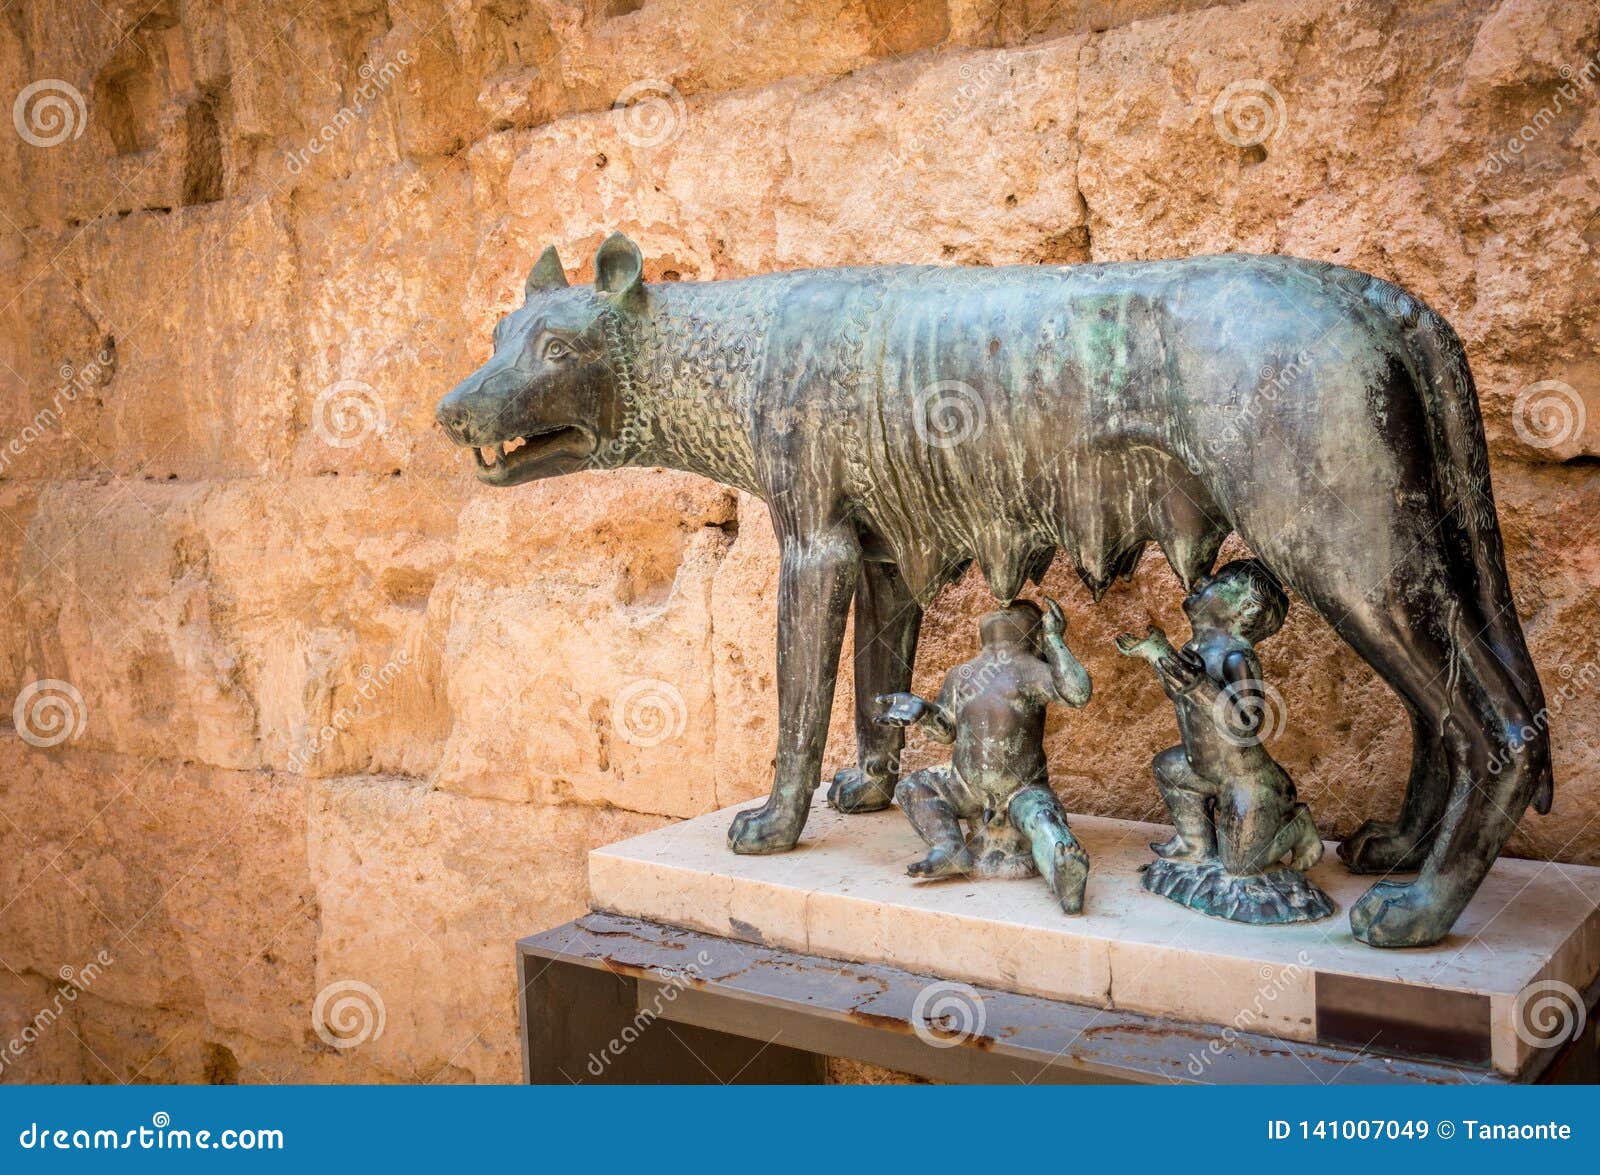 capitoline wolf in ancient tarraco. tarragona, spain